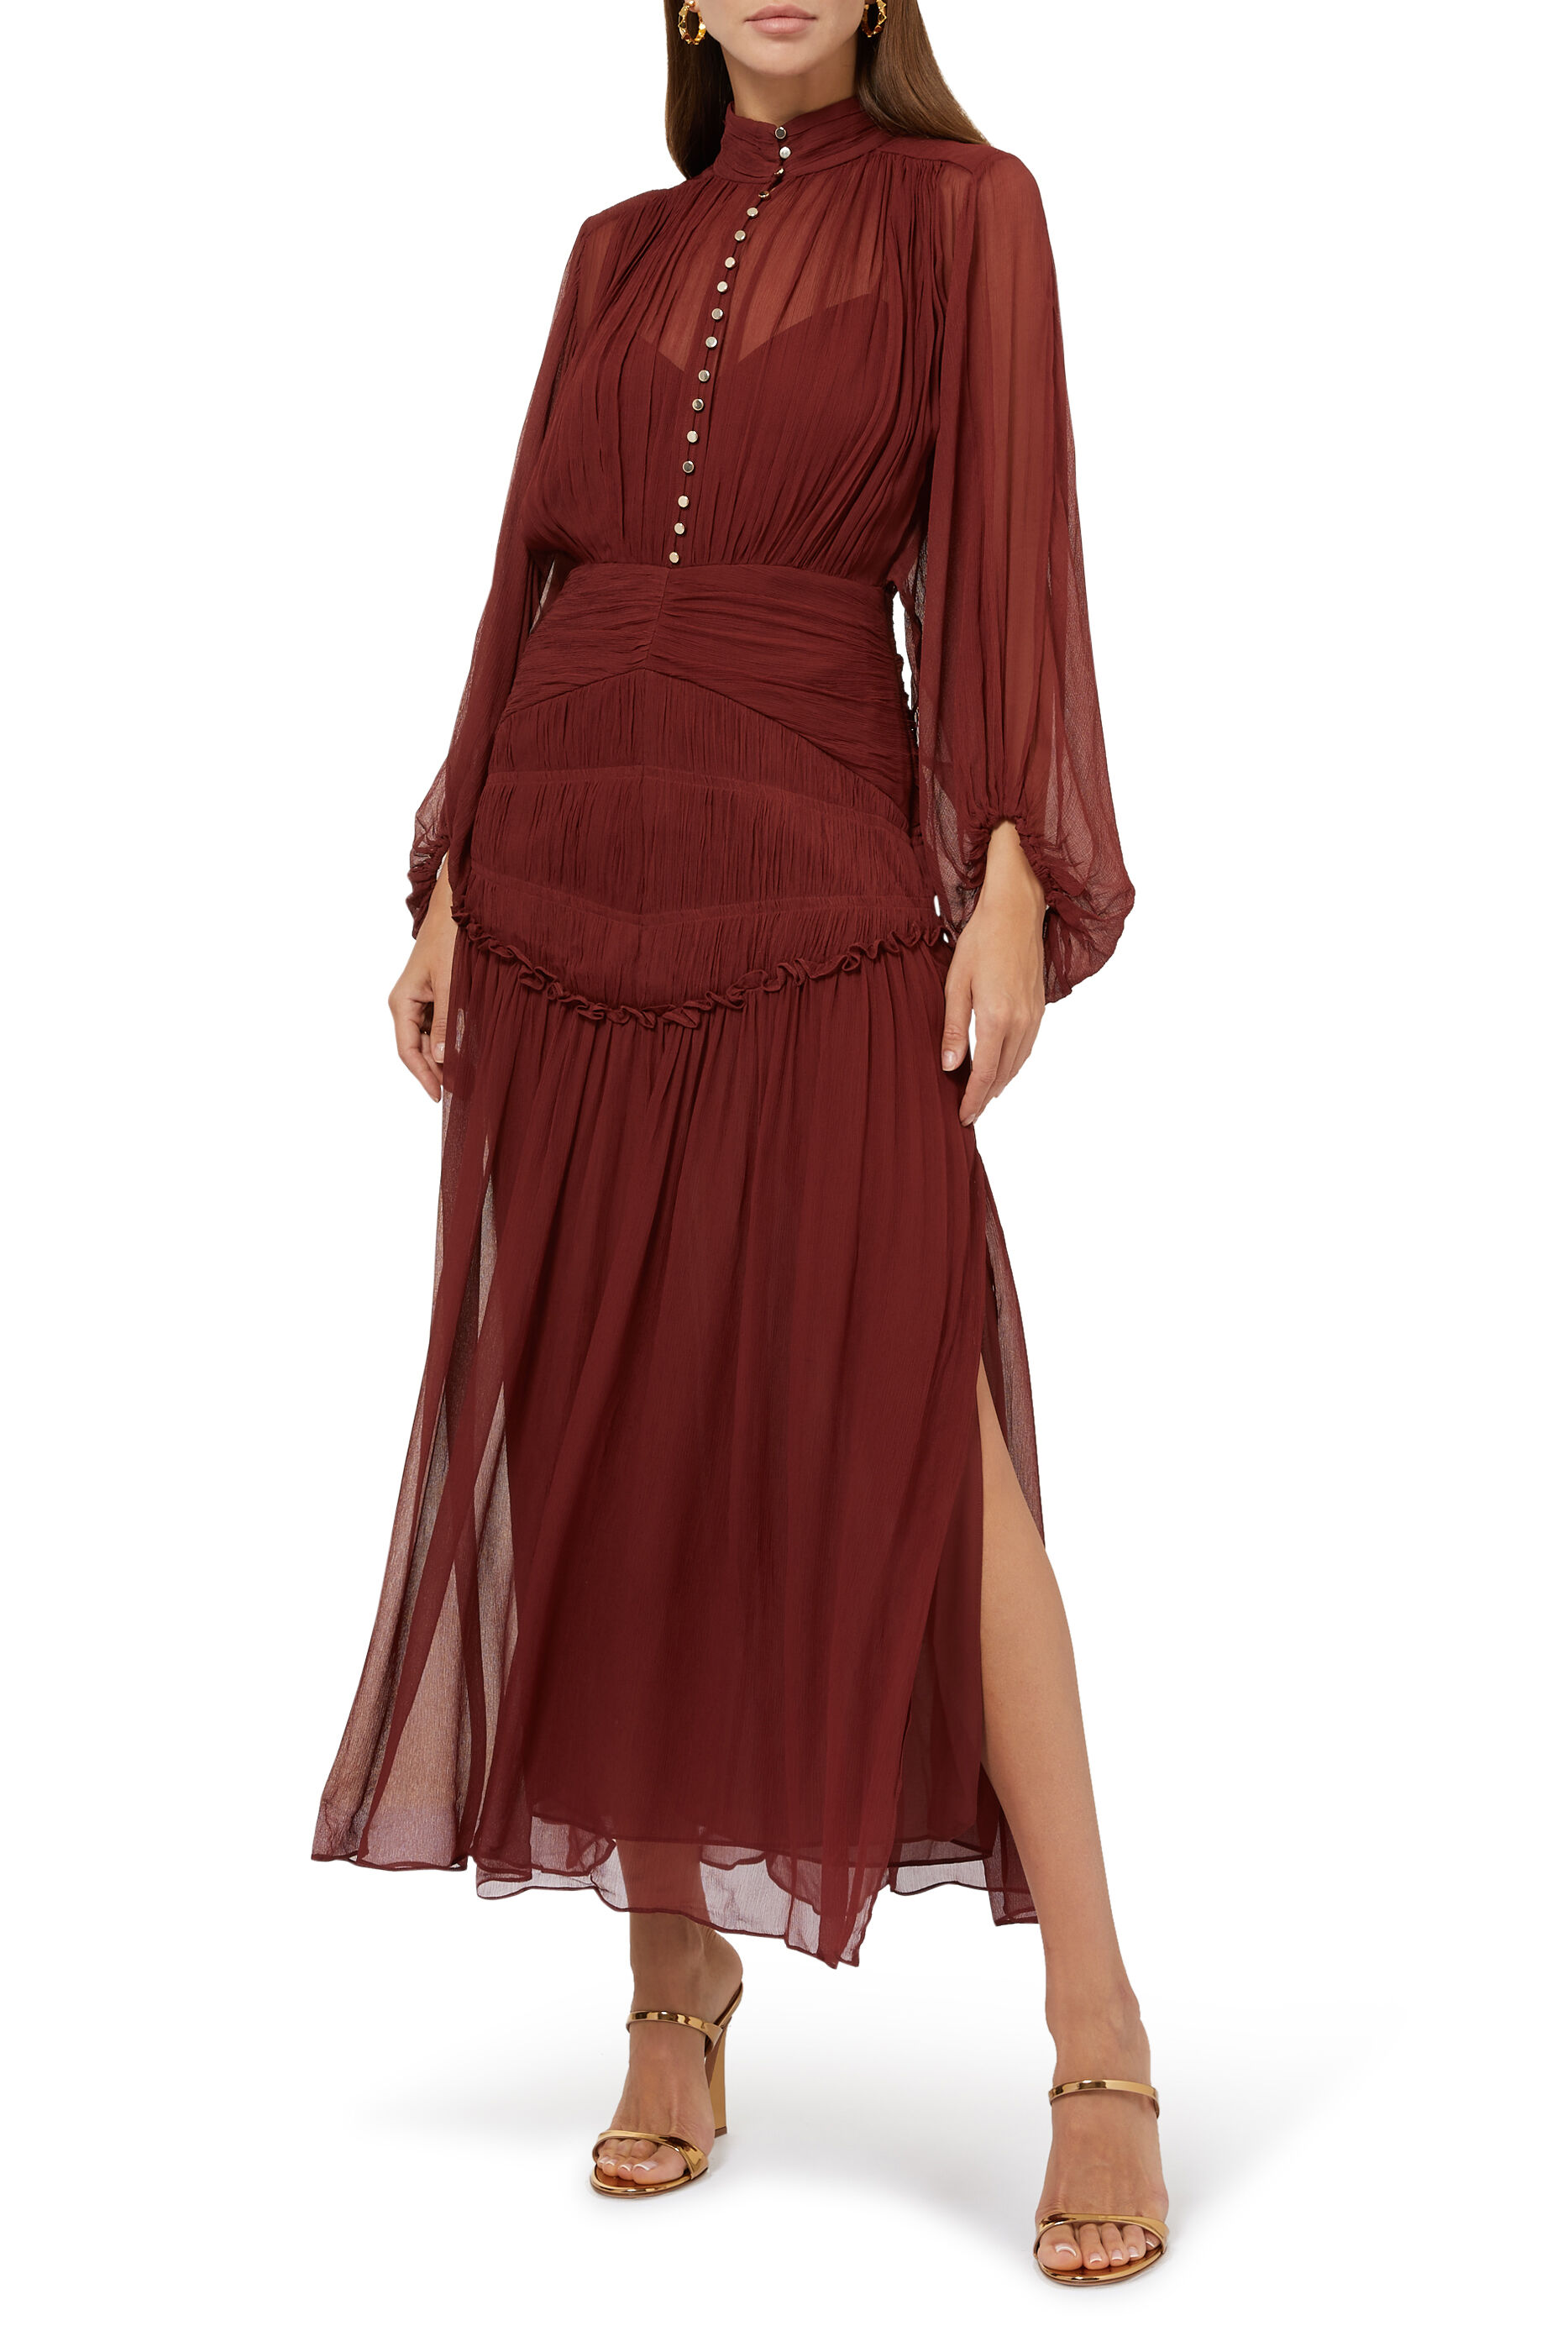 Buy Shona Joy Safira Button Up Ruched Midi Dress for Womens 